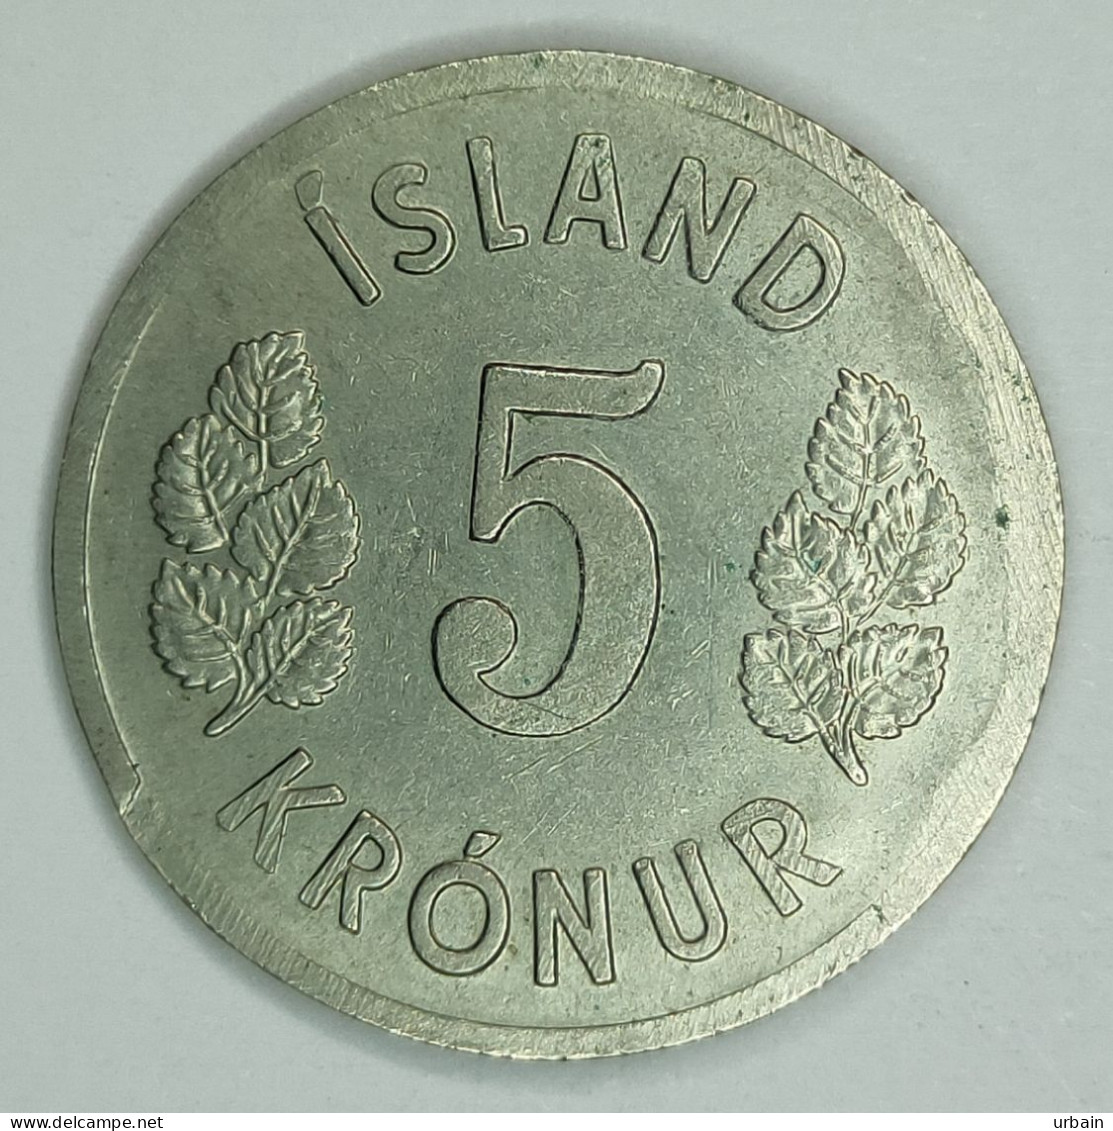 2x Coins - ICELAND - Republic Of Iceland (1944 - 1980) - Islande